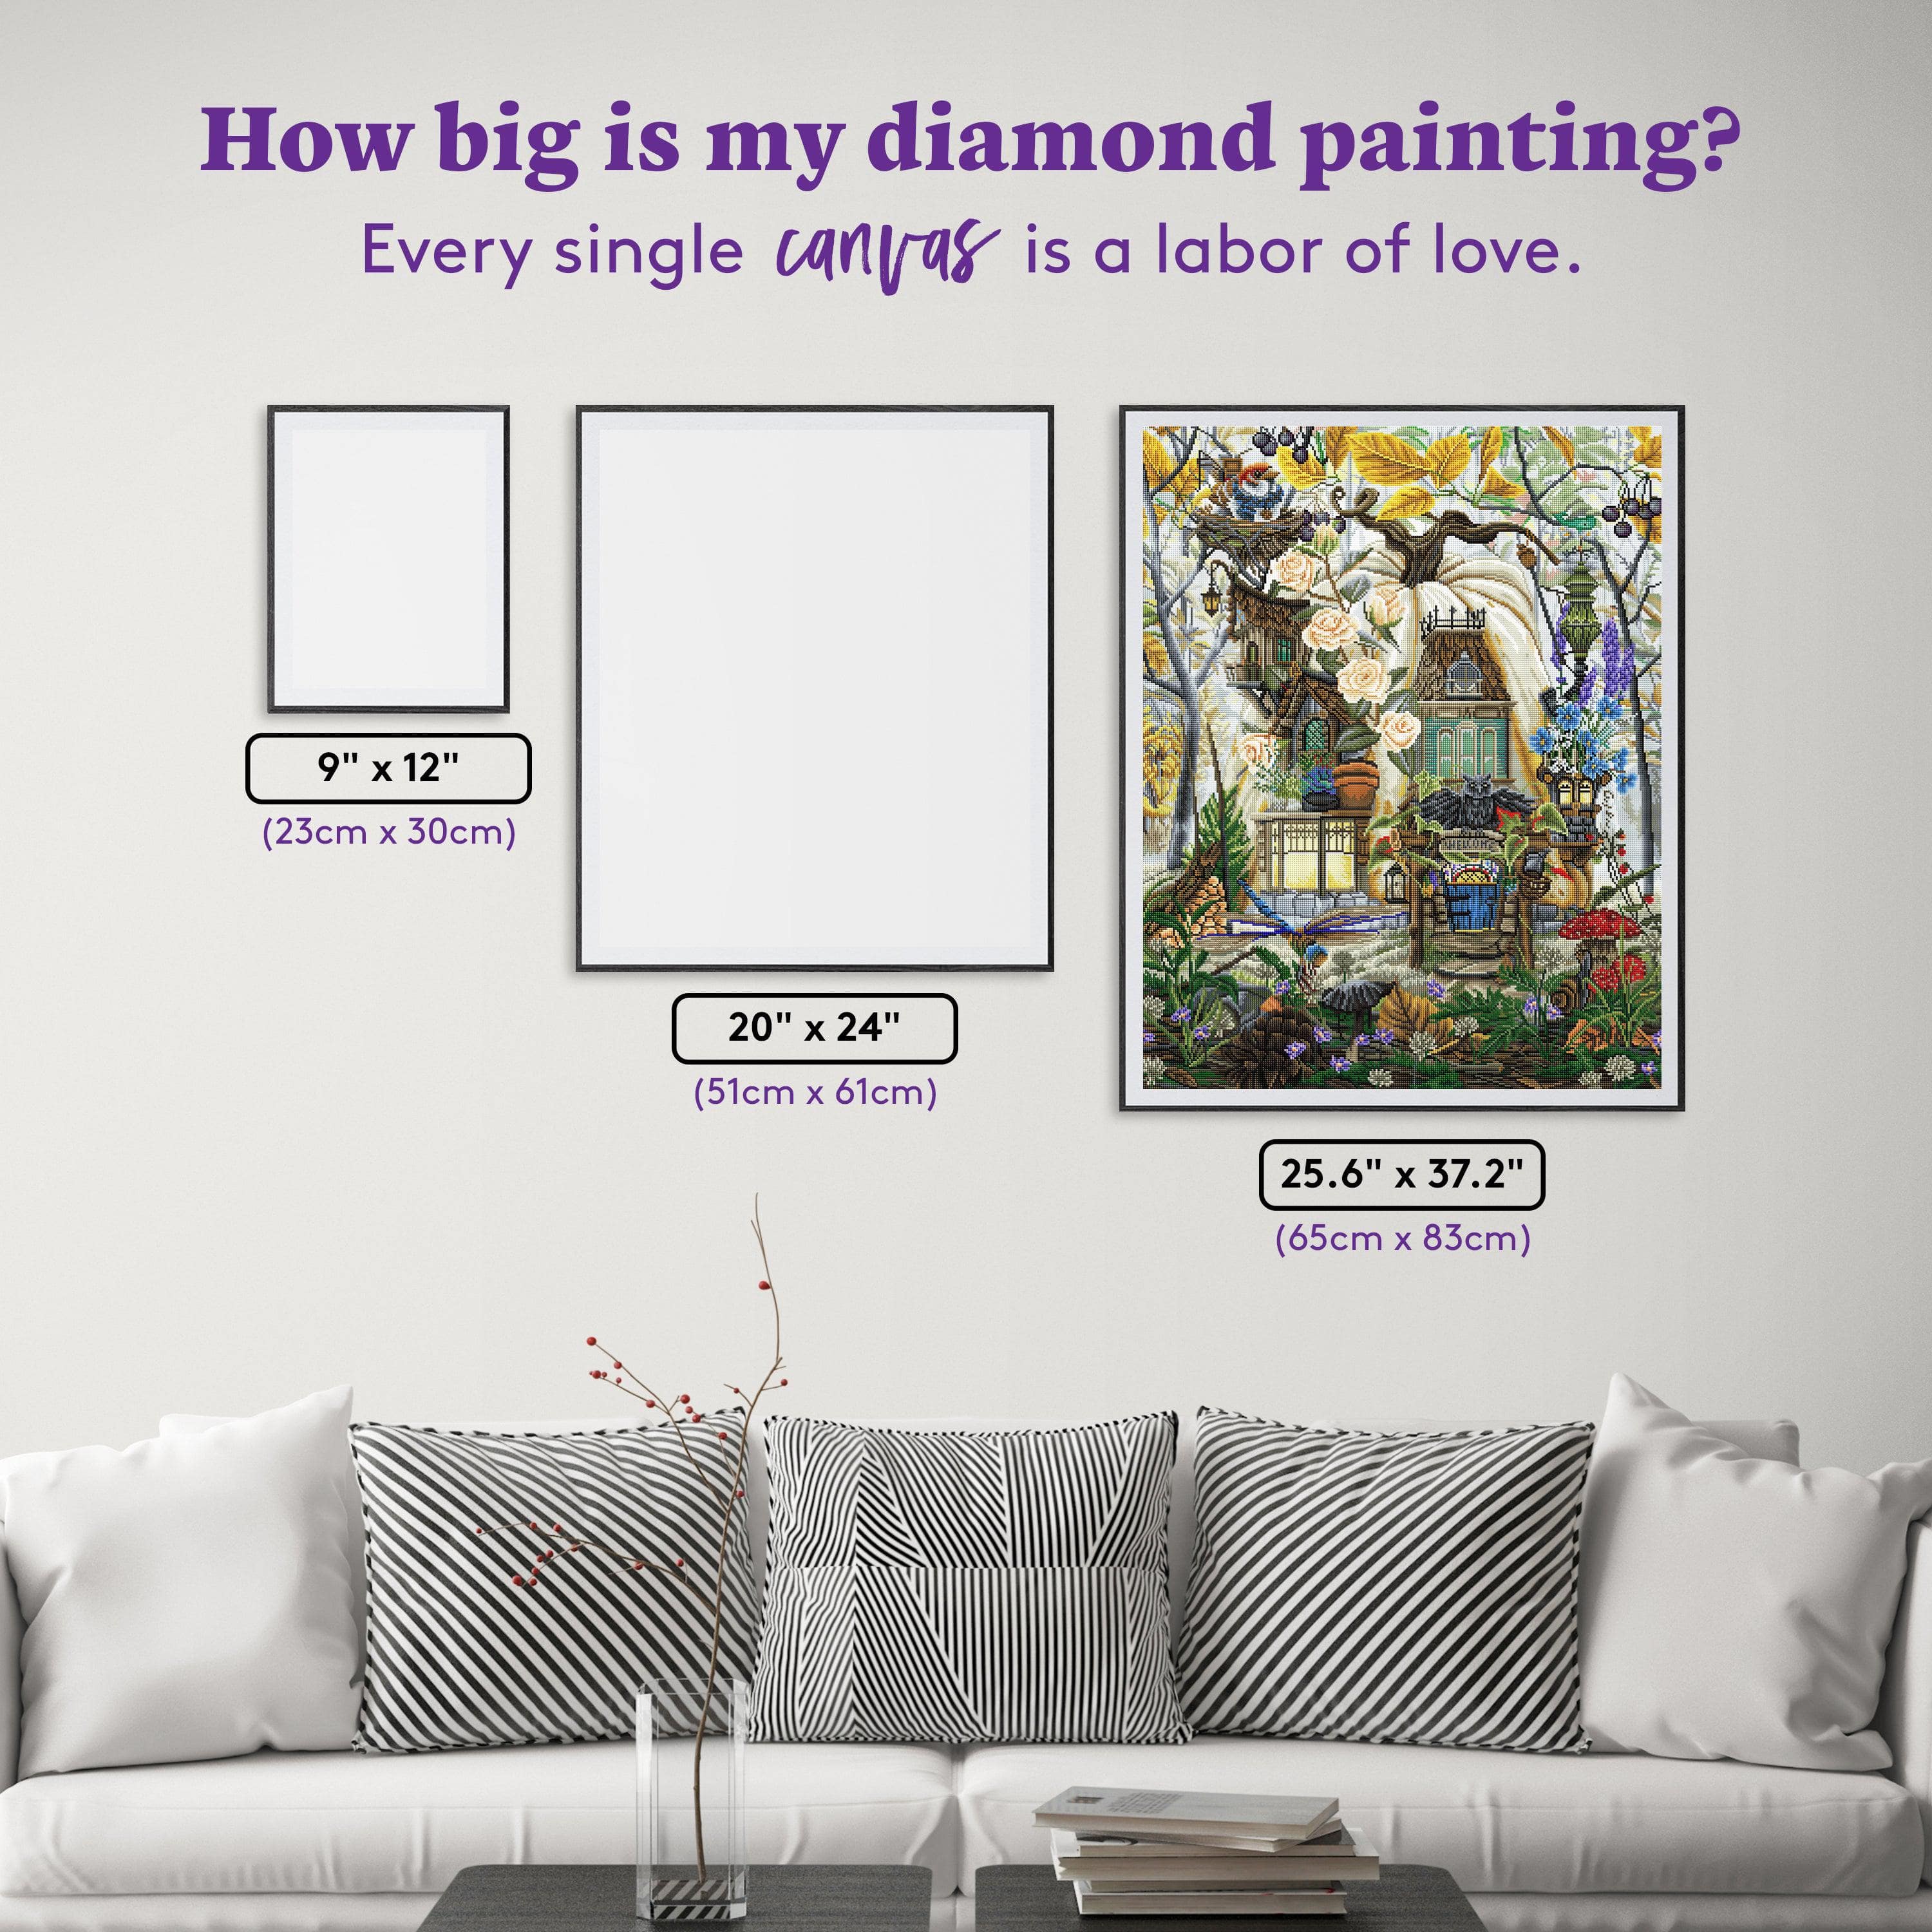 How to Frame a Diamond Art Painting - Diamond Painting House